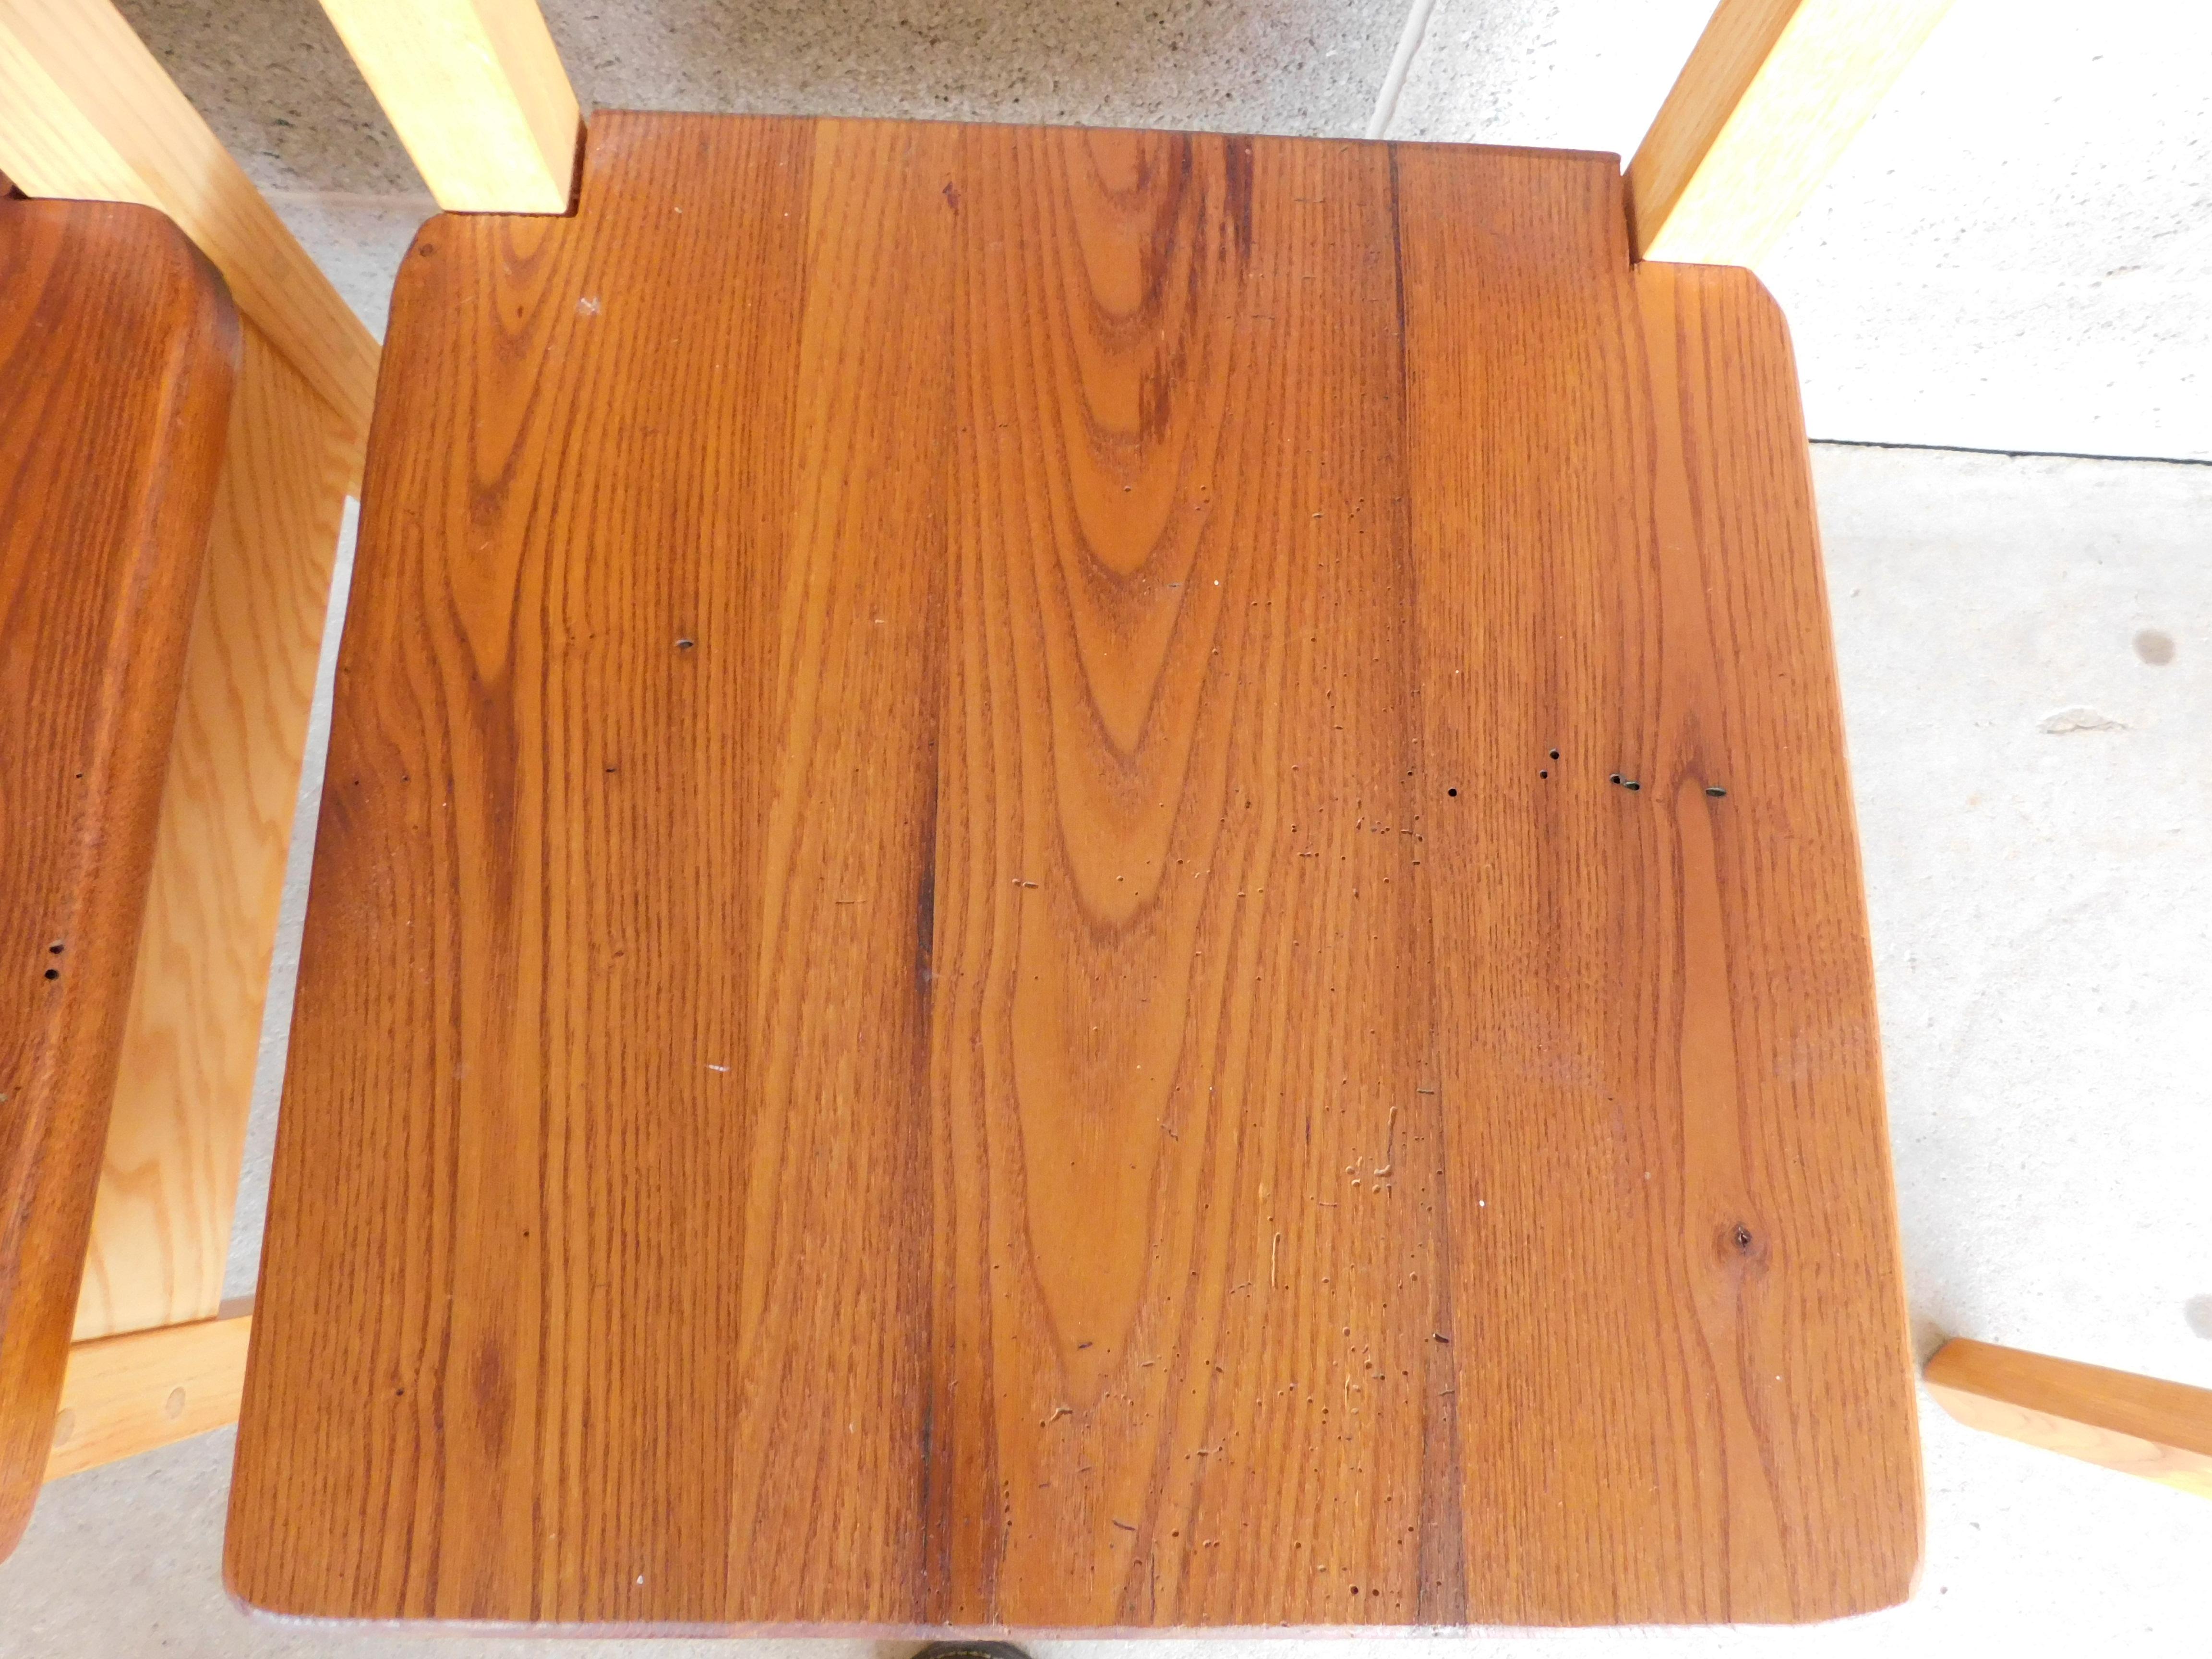 chestnut wood furniture